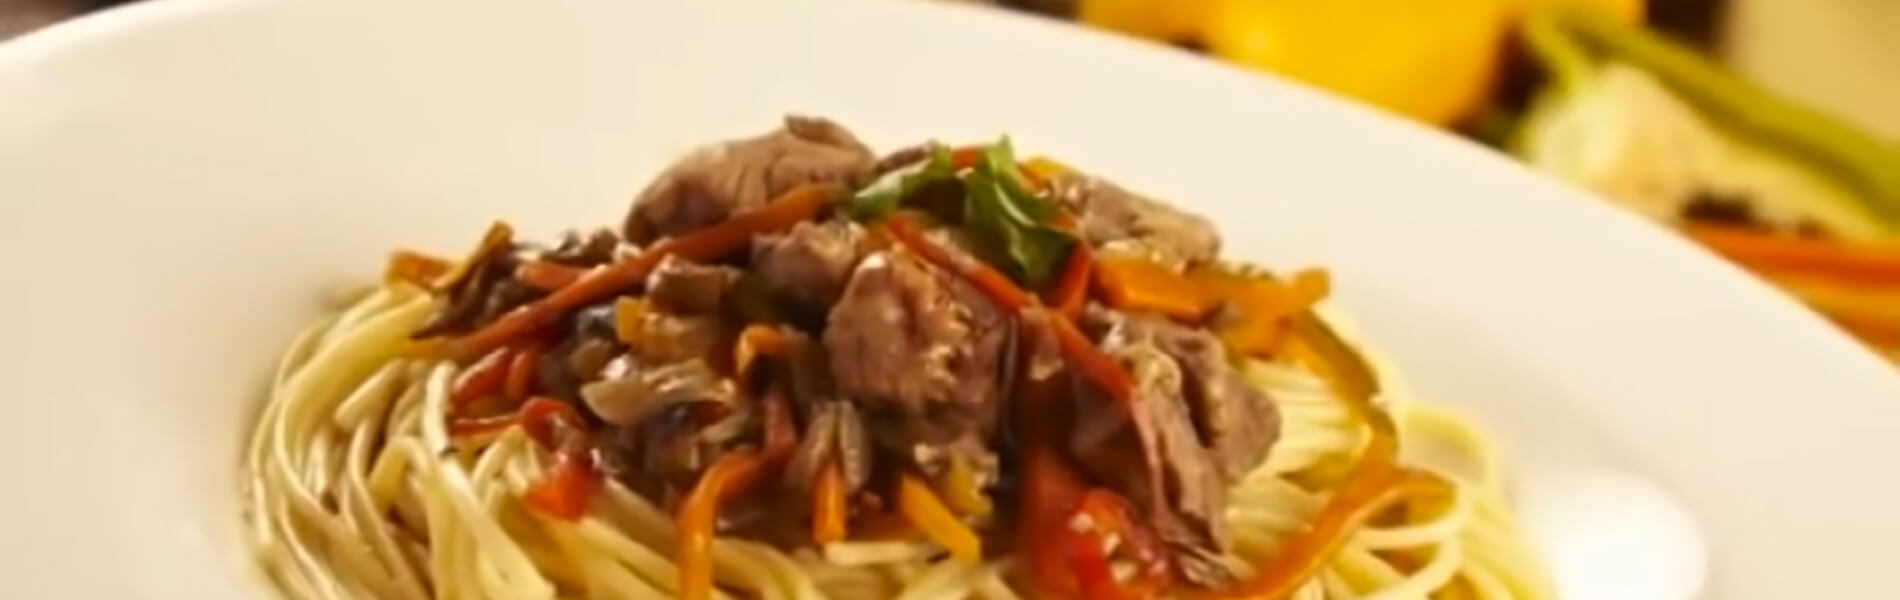 Spaghetti Doria con verduras salteadas, cerdo y salsa de soya